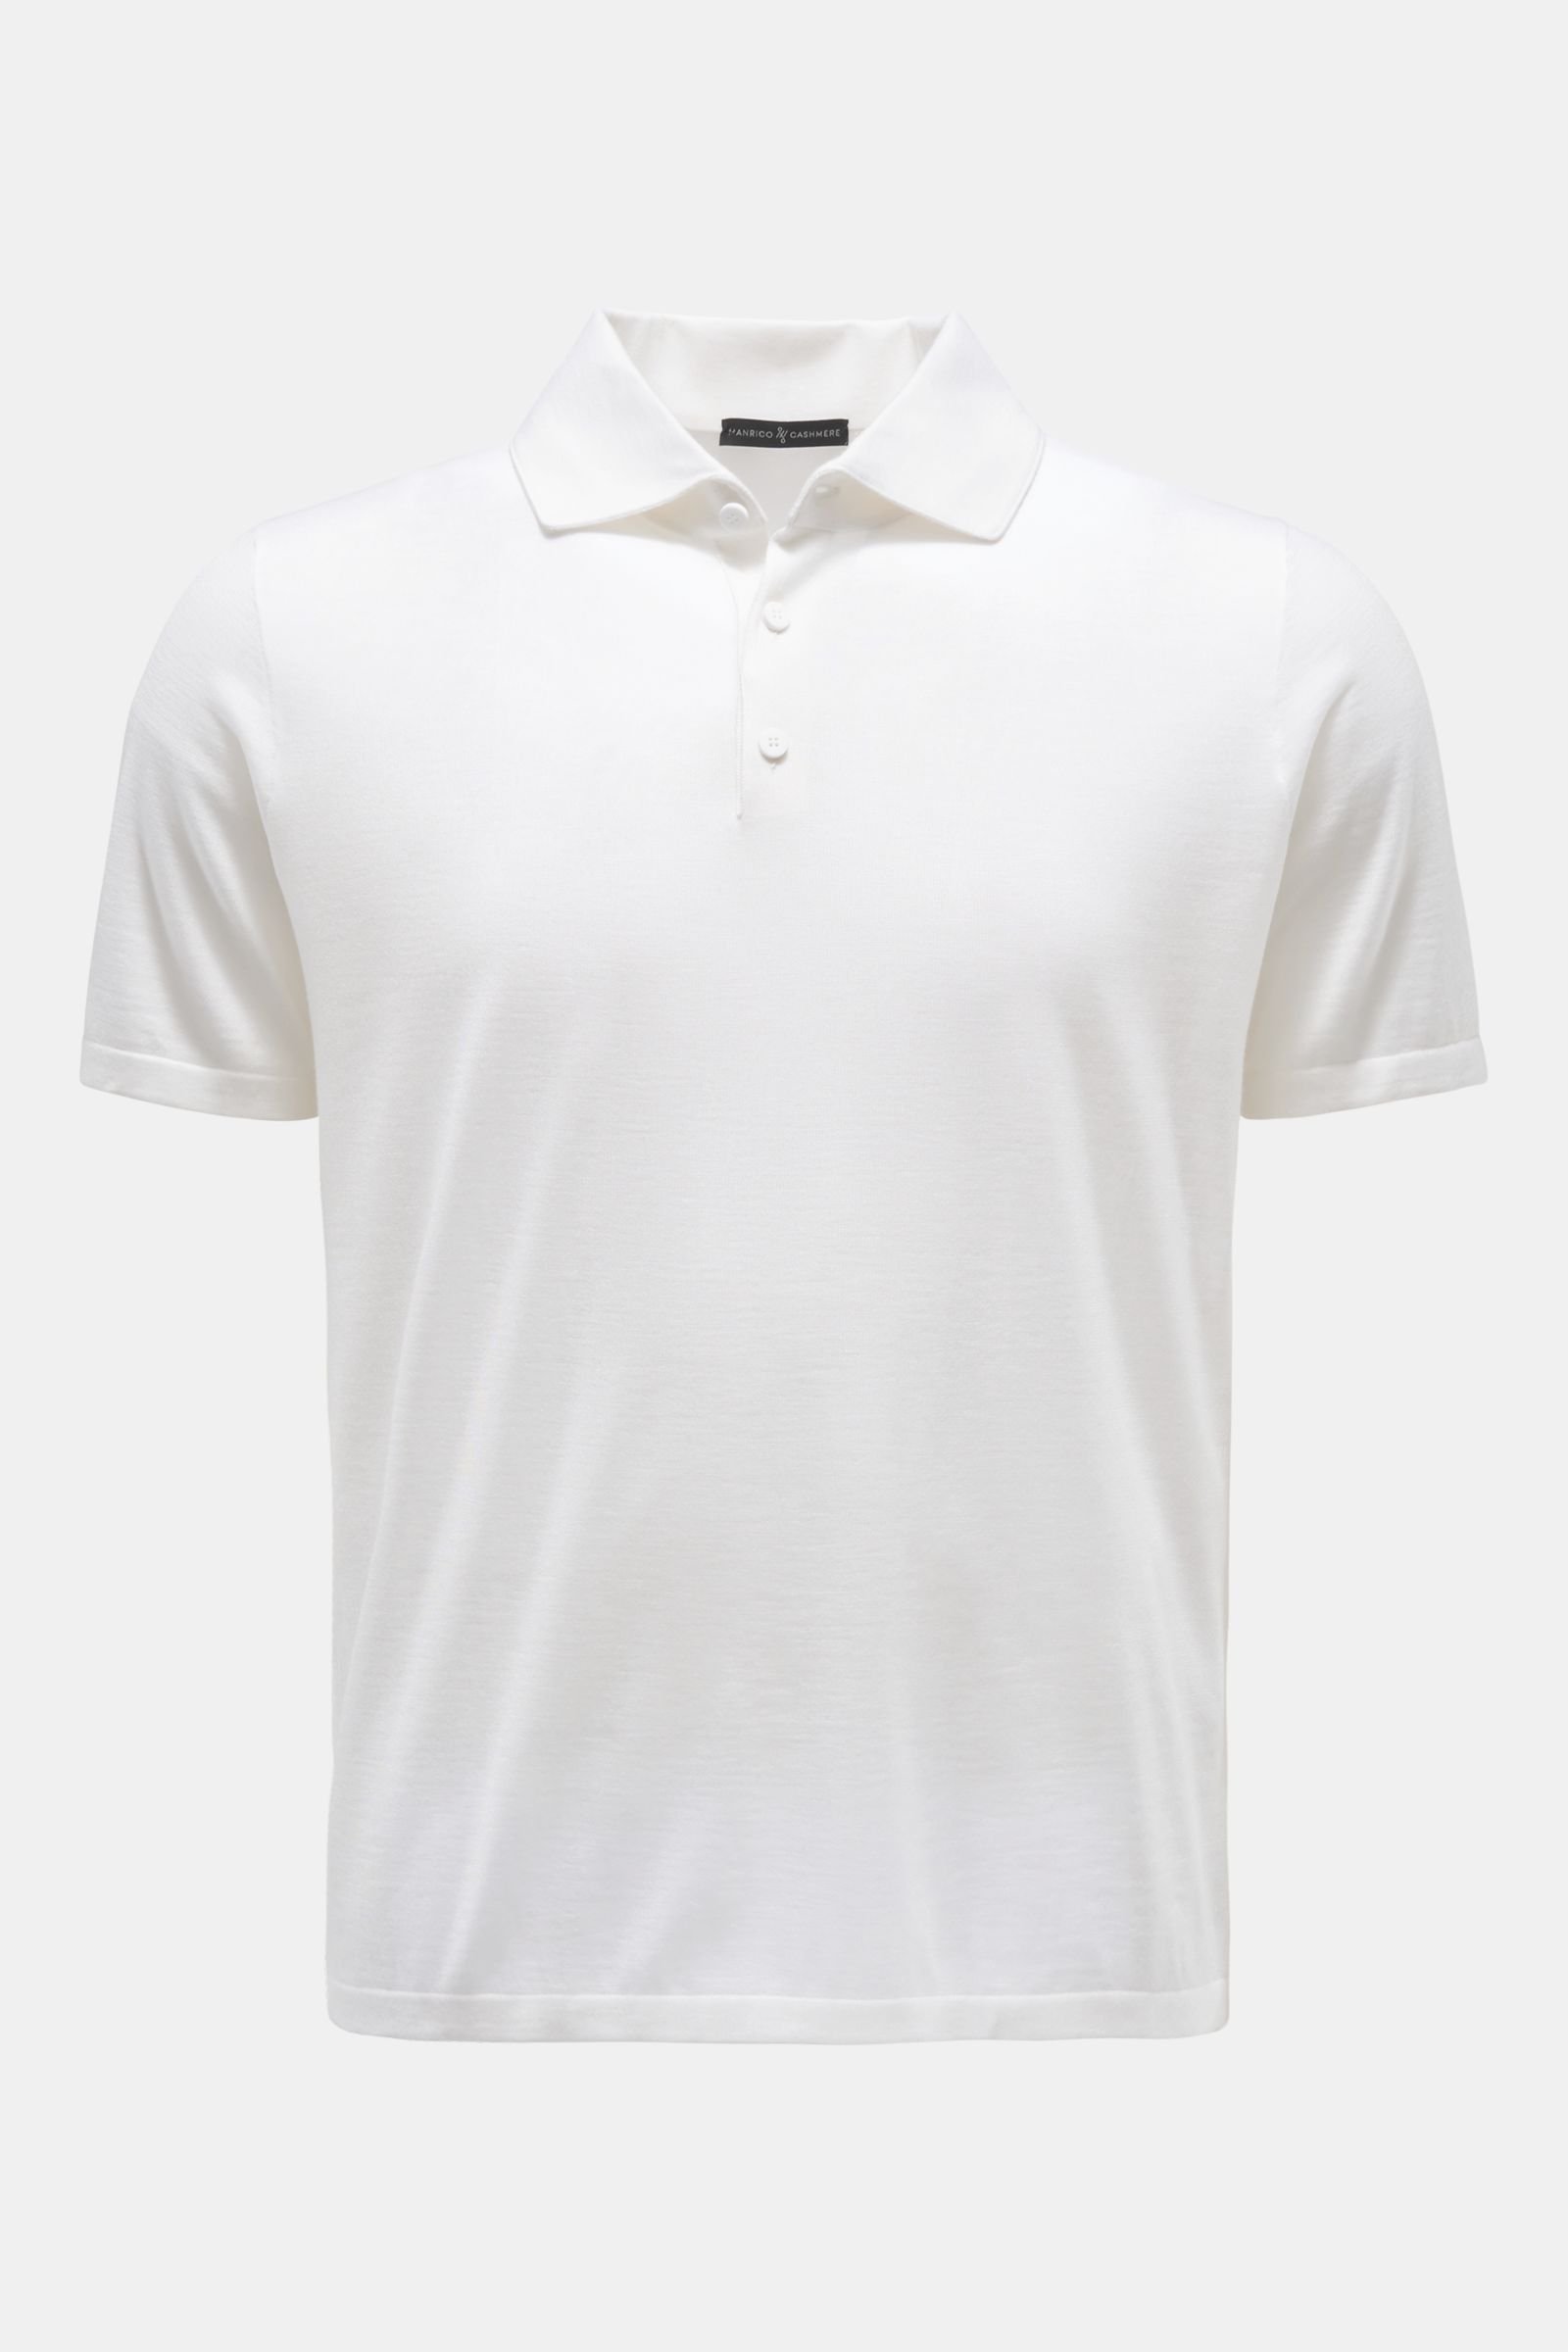 Cashmere Feinstrick-Poloshirt weiß